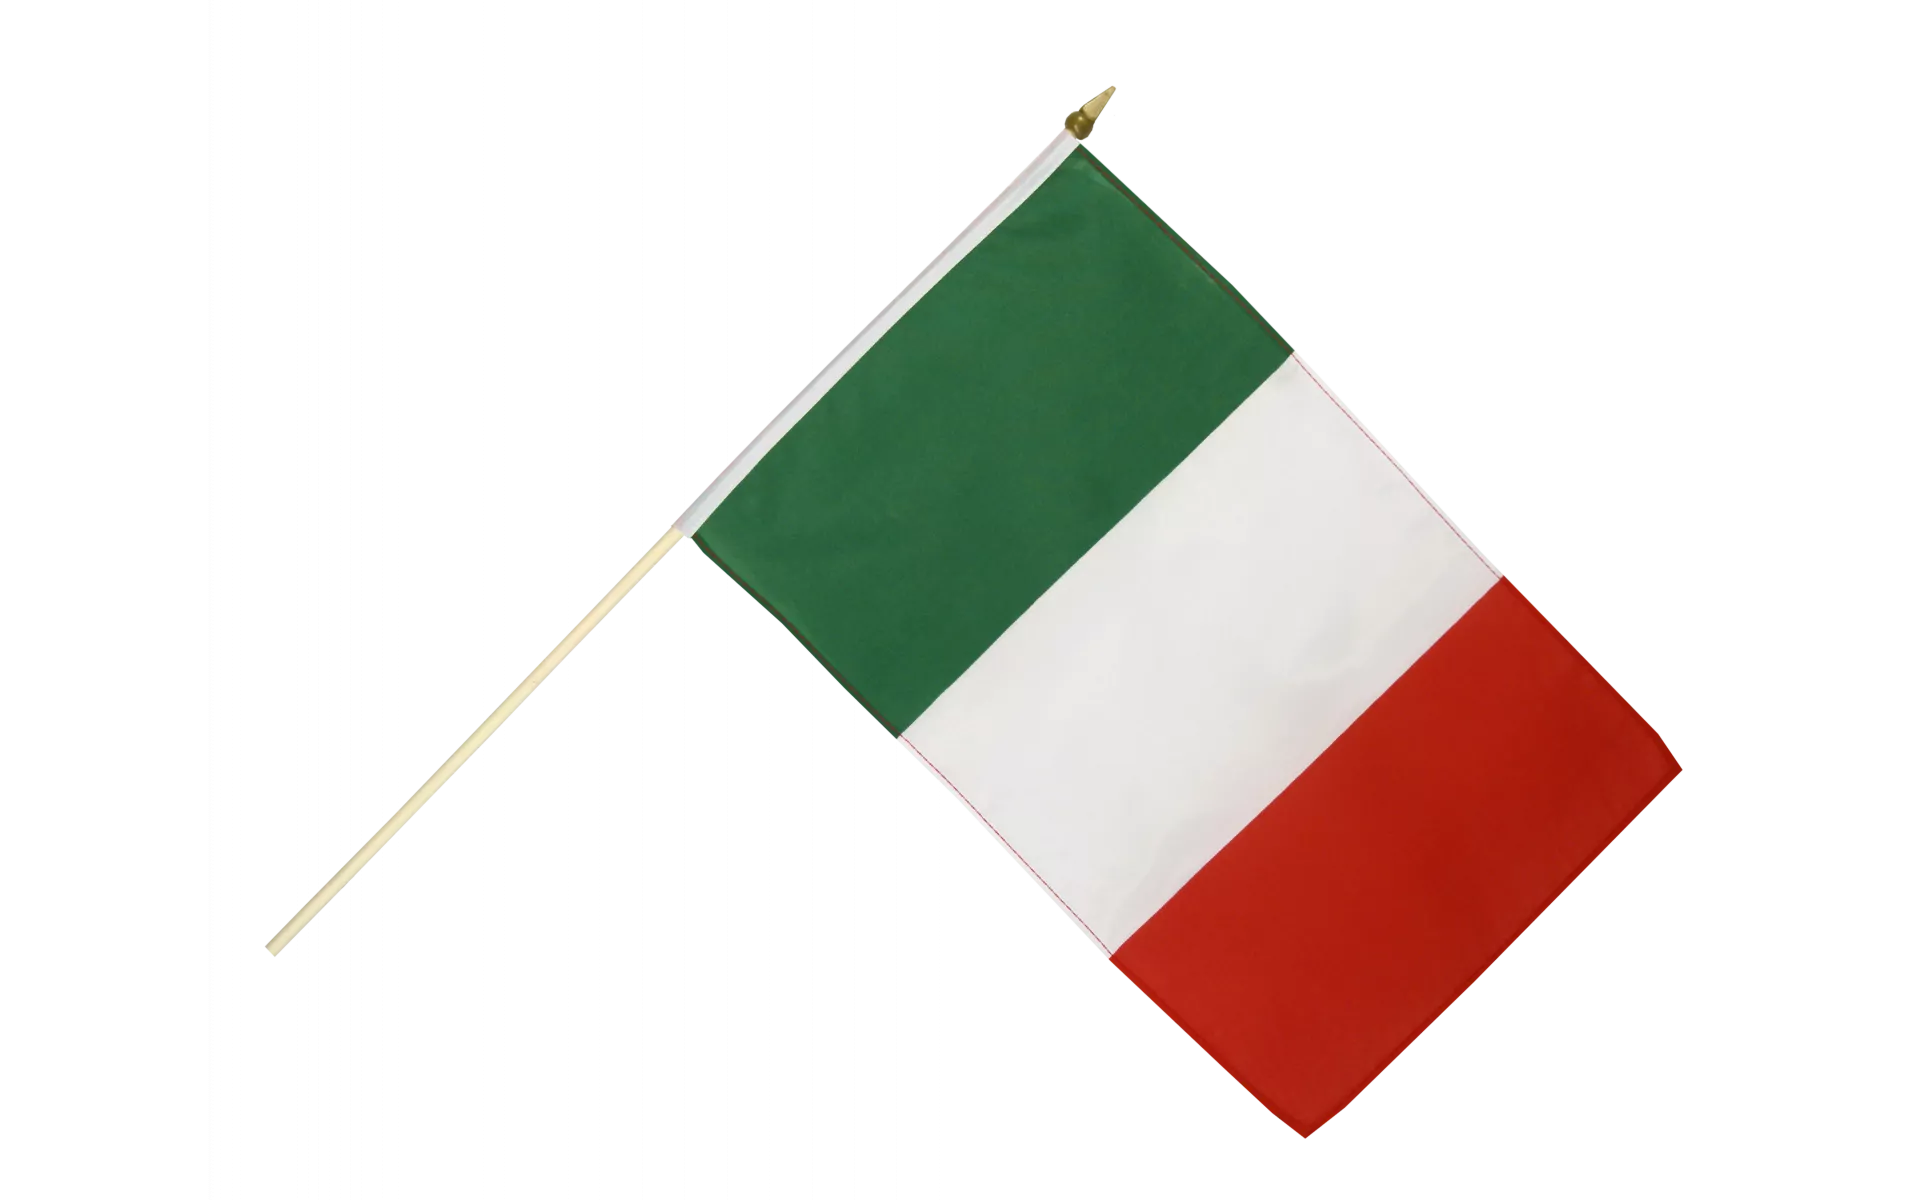 Italien Sizilien Stockflagge Flaggen Fahnen Stockfahne 30x45cm